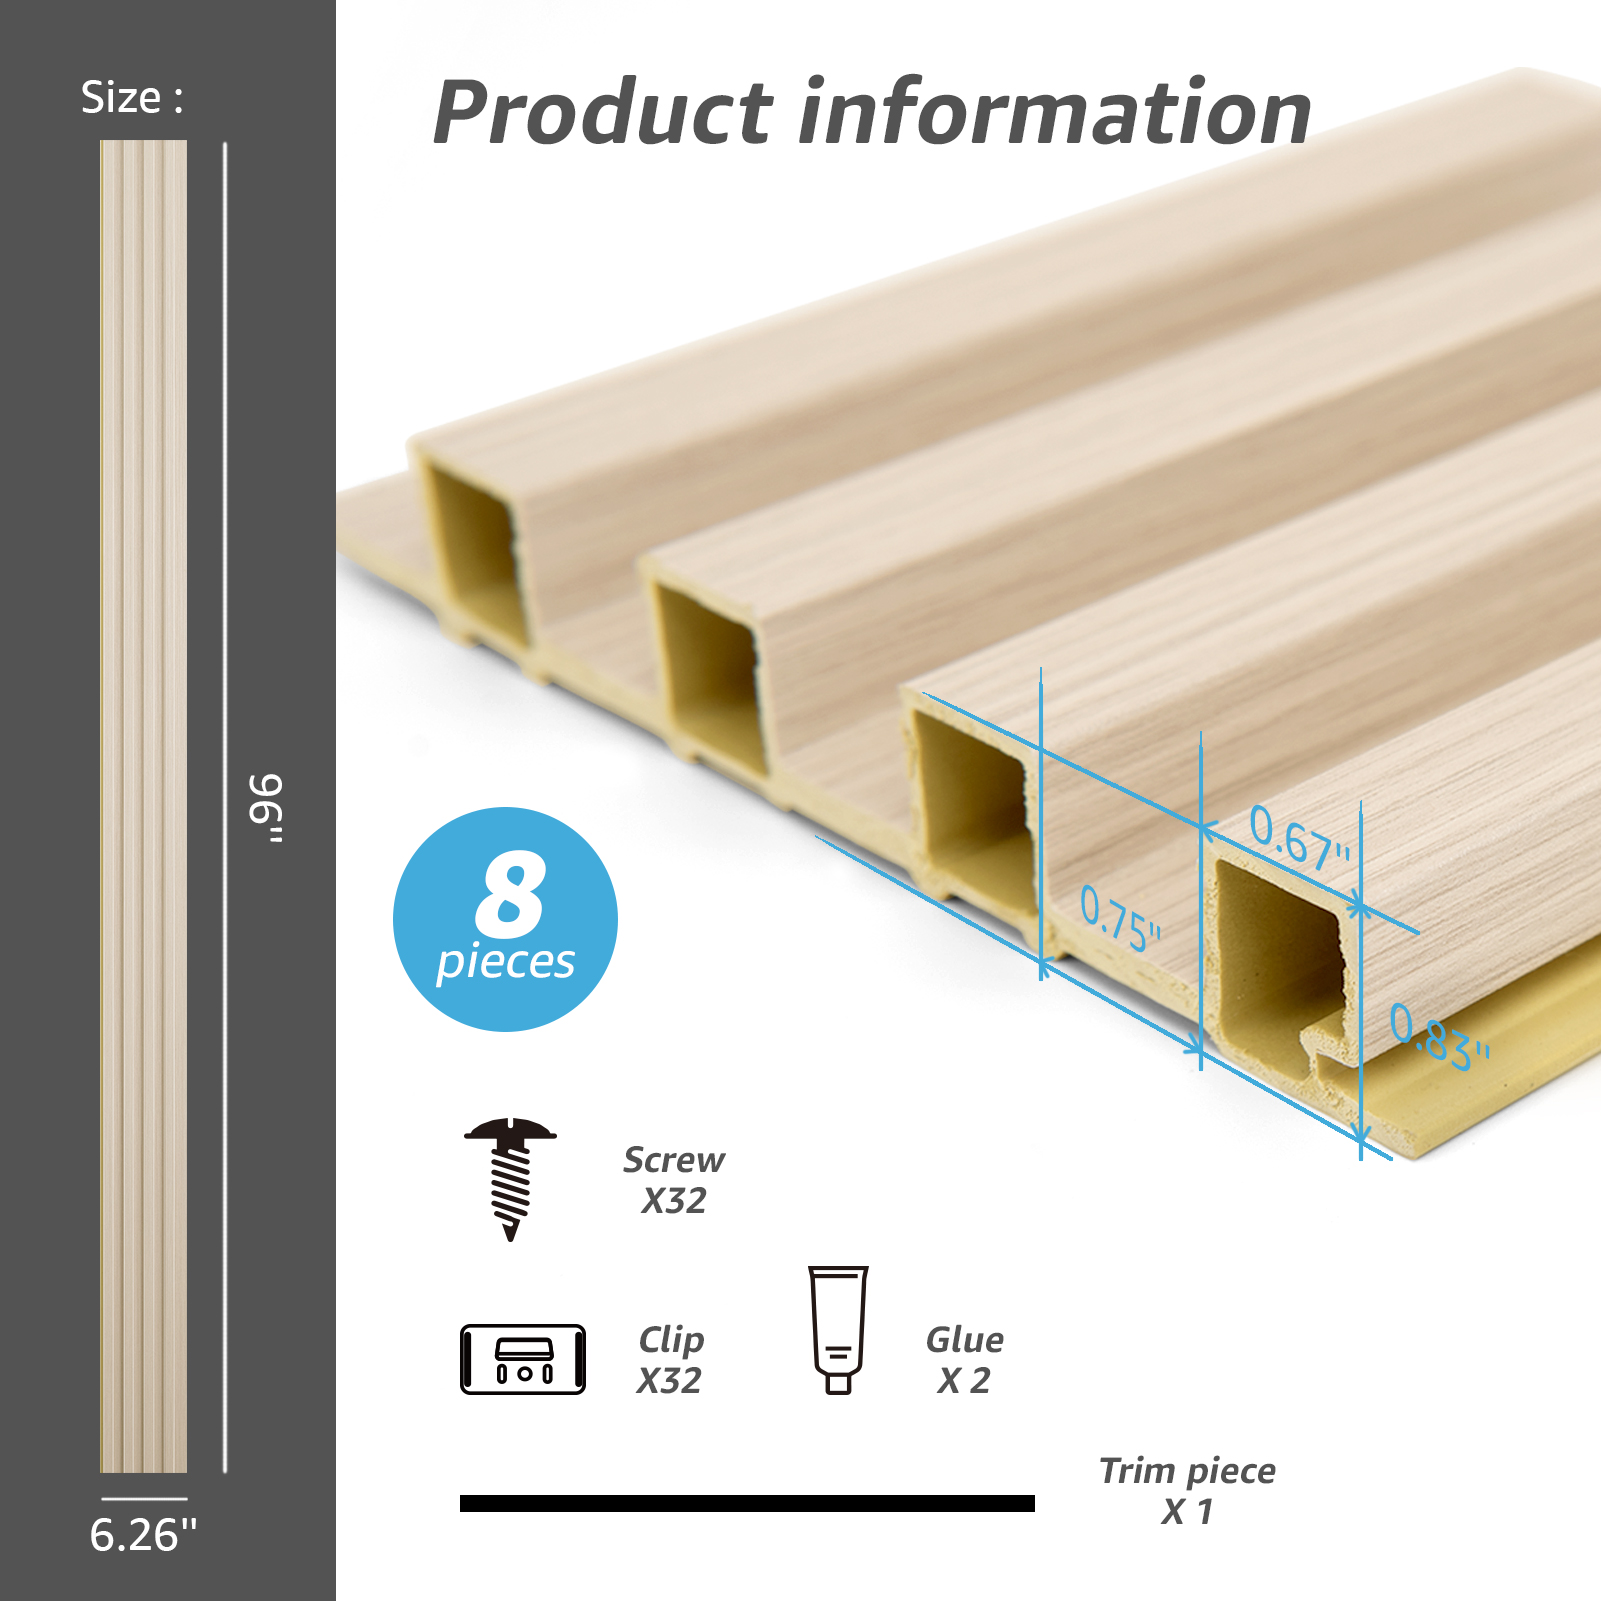 Art3d Slat Wall Panel for Modern Decor, WPC Acoustic Diffuser Panel, 8 ...